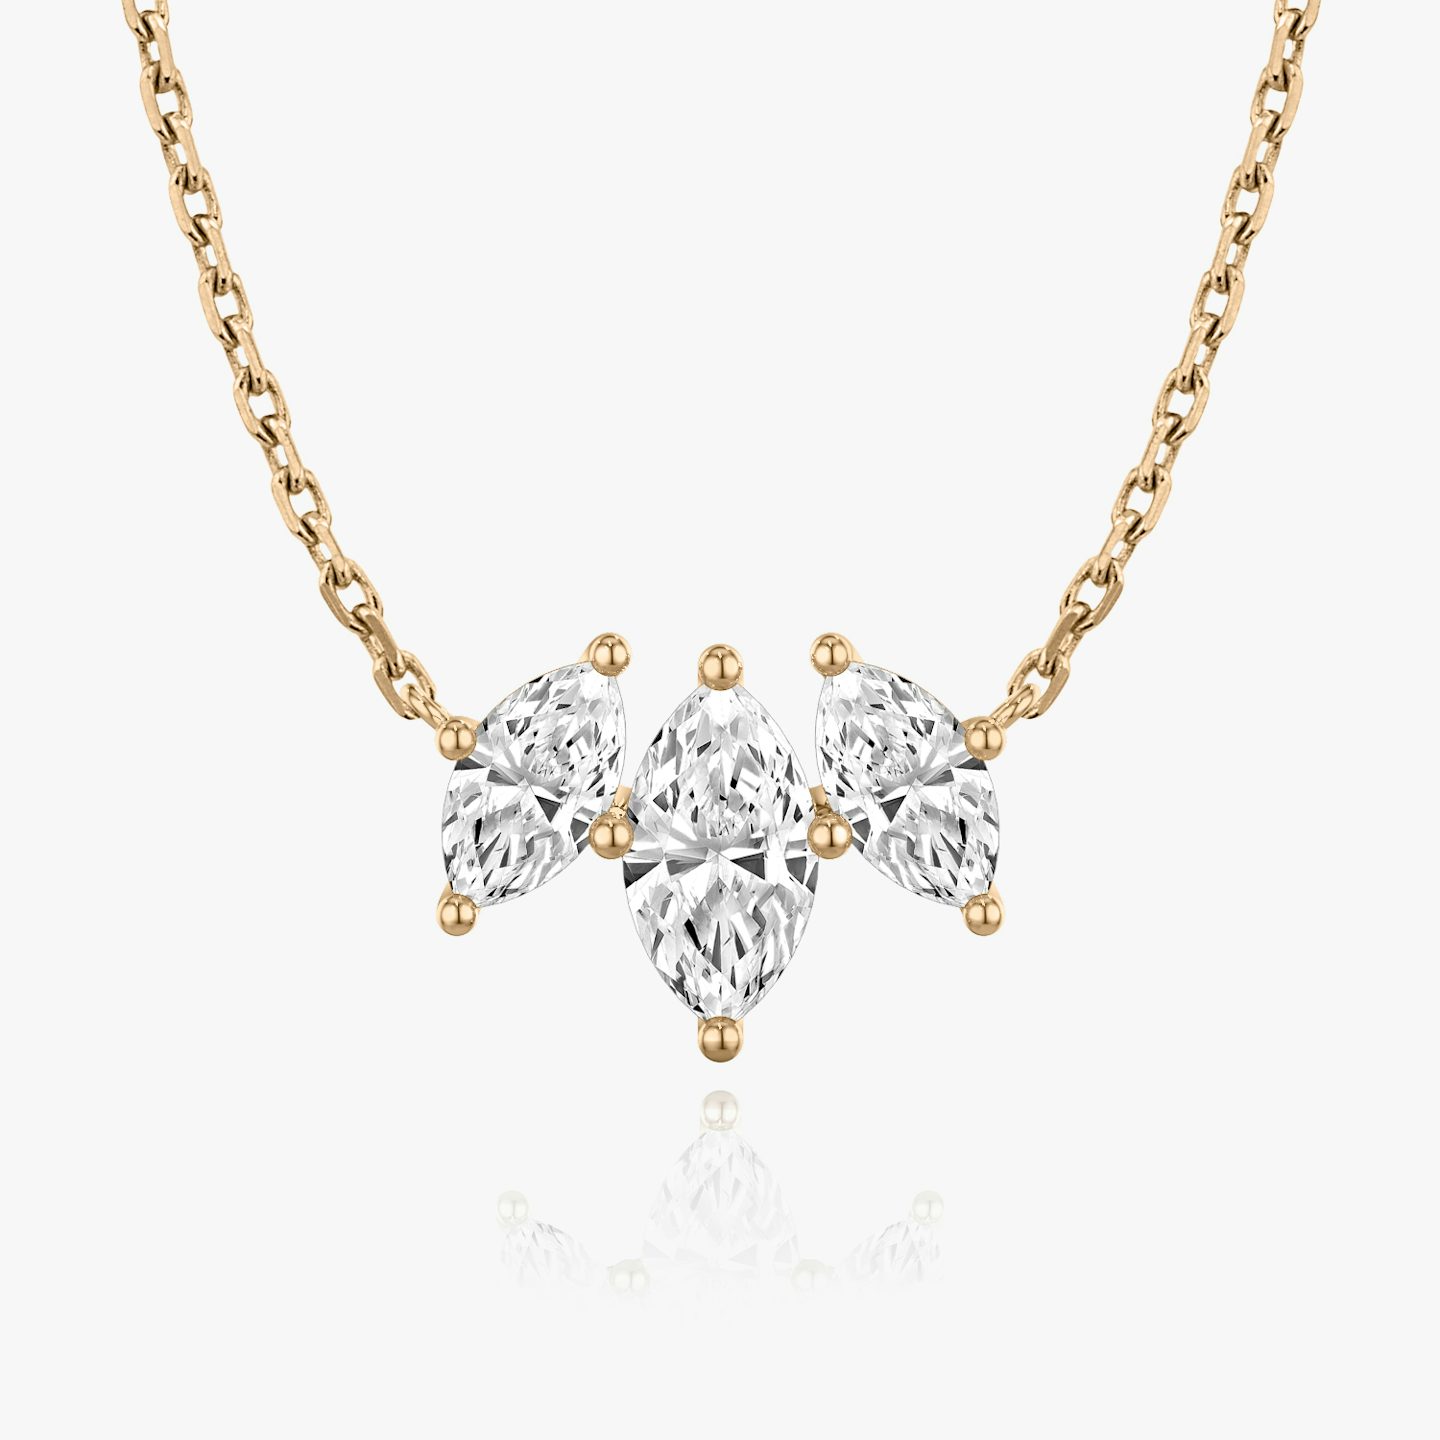 Arc Necklace | Marquise | 14k | Rose Gold | diamondCount: 3 | diamondSize: large | chainLength: 16-18